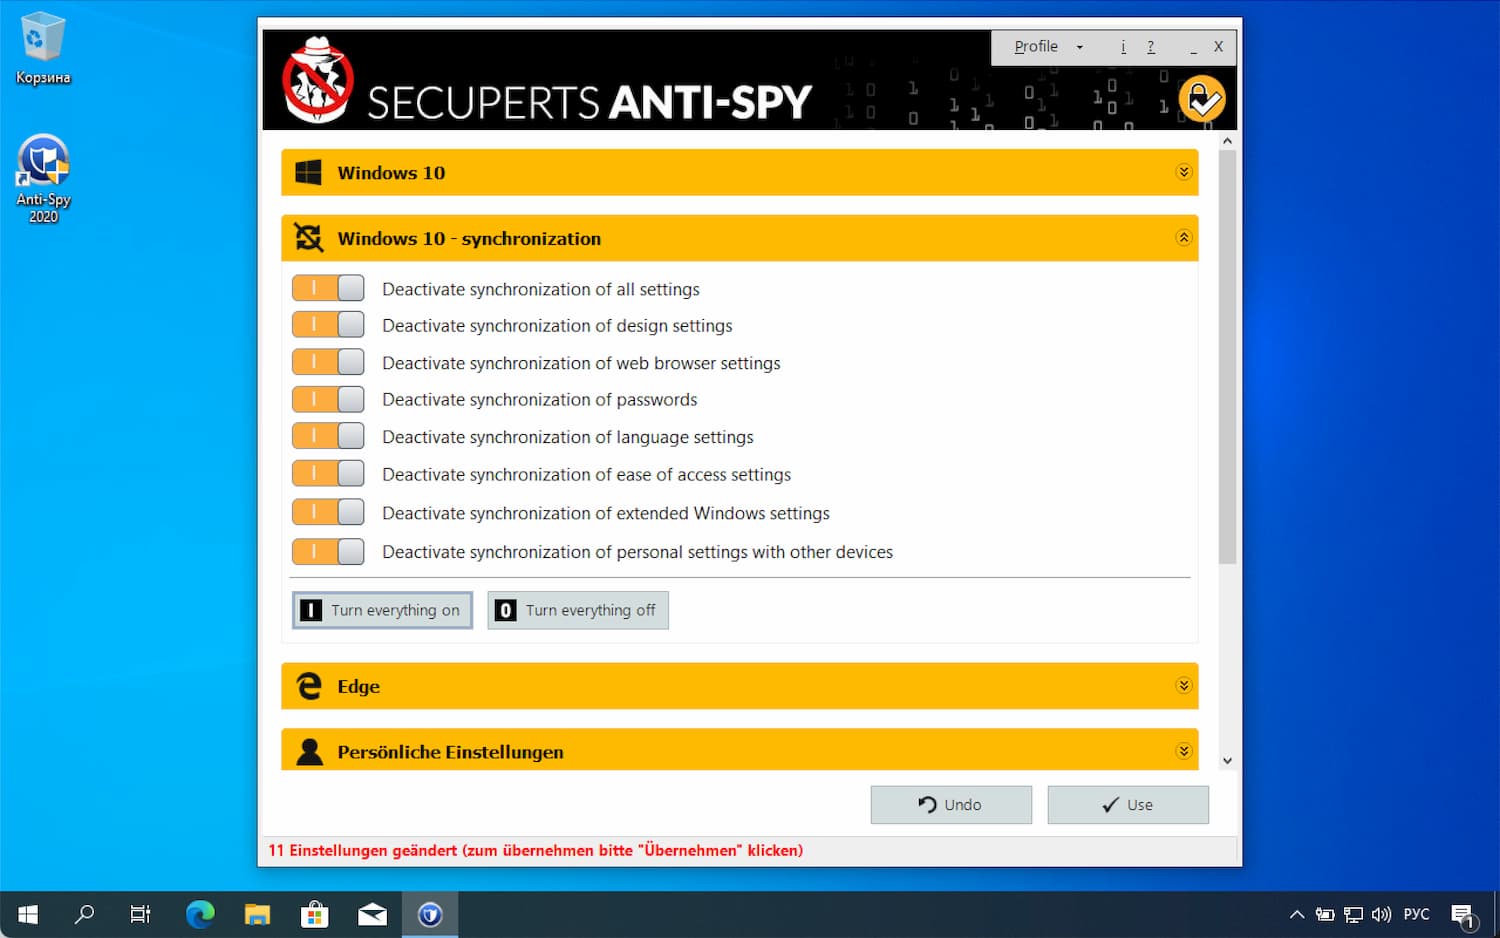 SecuPerts Anti-Spy